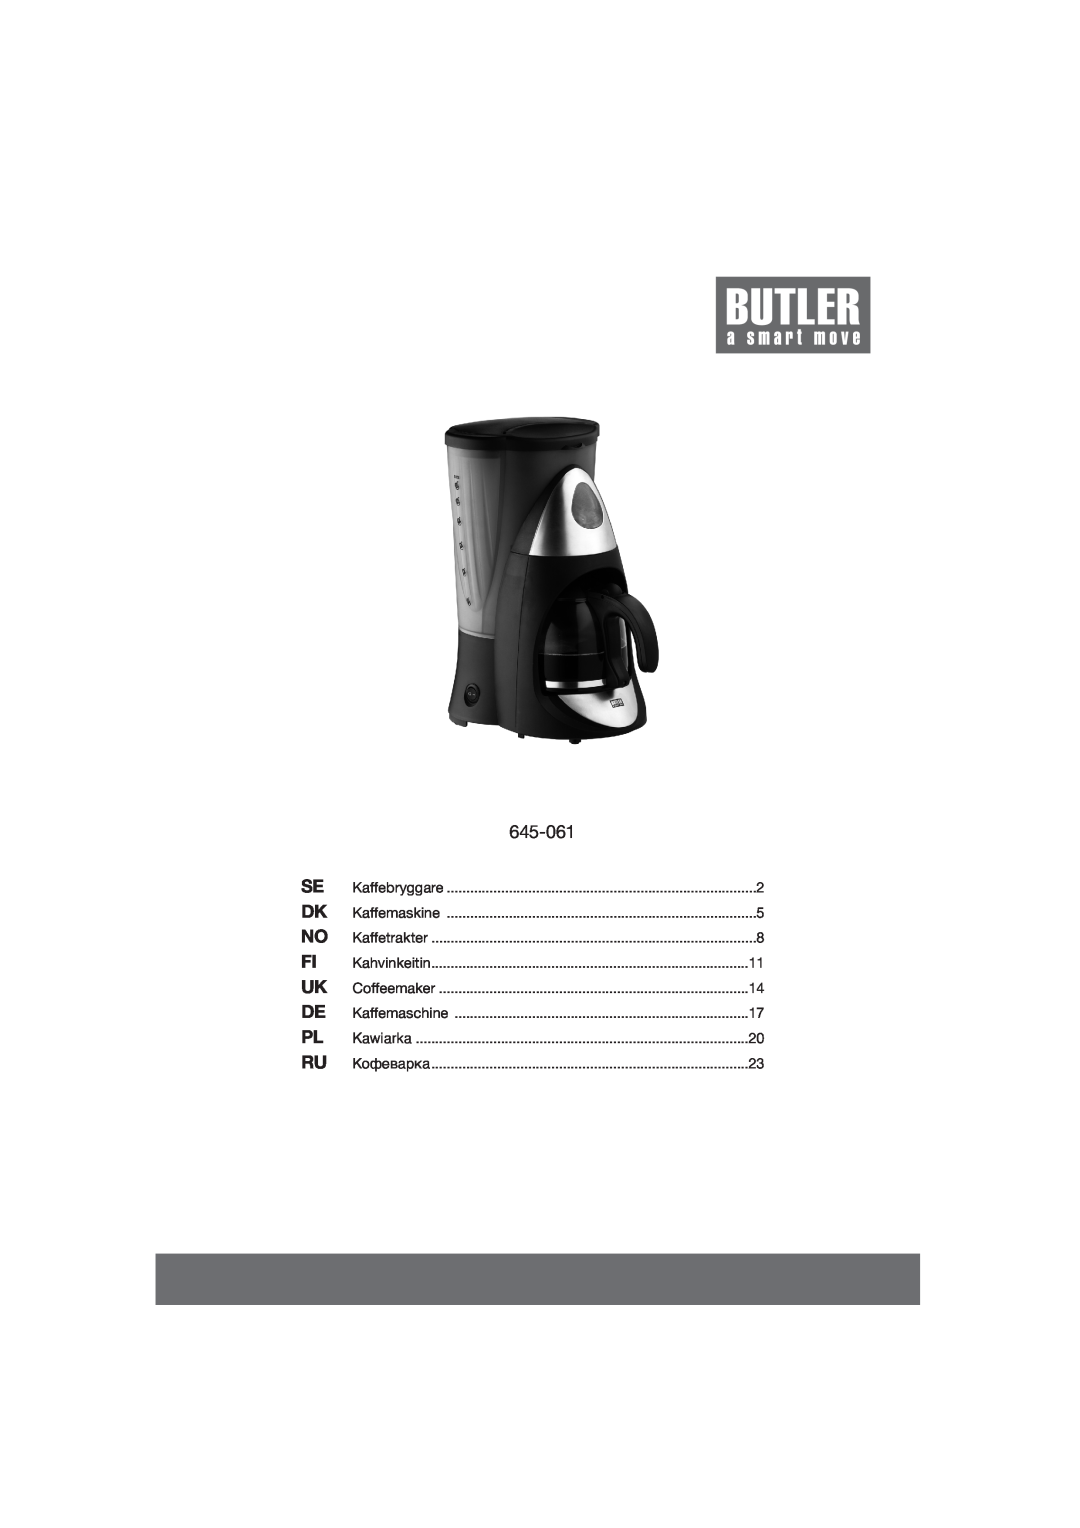 Butler 645-061 manual Kaffebryggare, Kaffemaskine, Kaffetrakter, Kahvinkeitin, Coffeemaker, Kaffemaschine, Kawiarka 